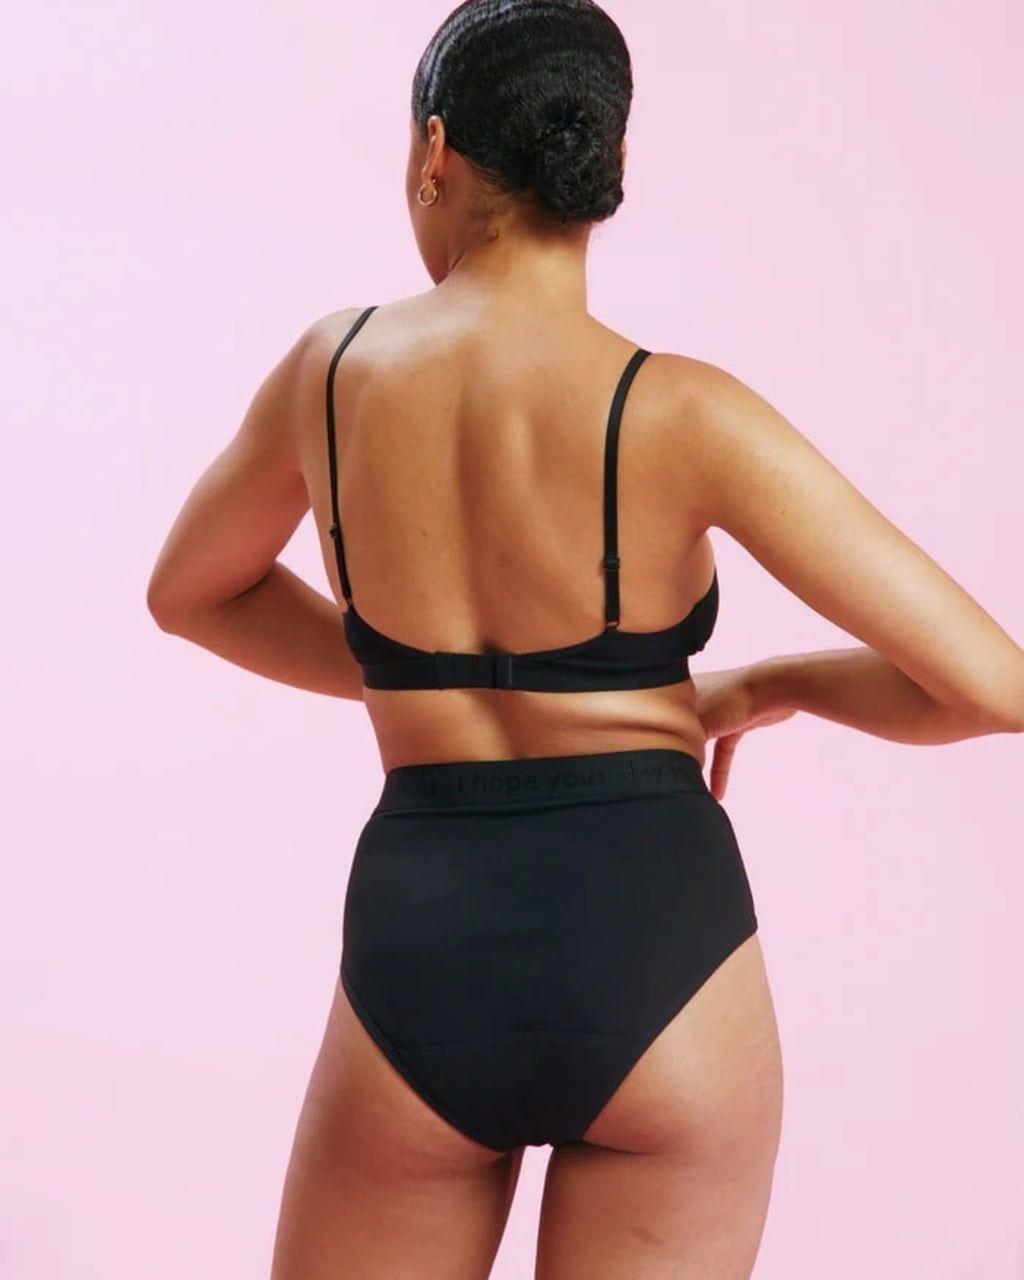 https://ec.nice-cdn.com/upload/image/product/large/default/the-female-company-period-underwear-high-waist-basic-black-normal-56-2113449-en.jpg